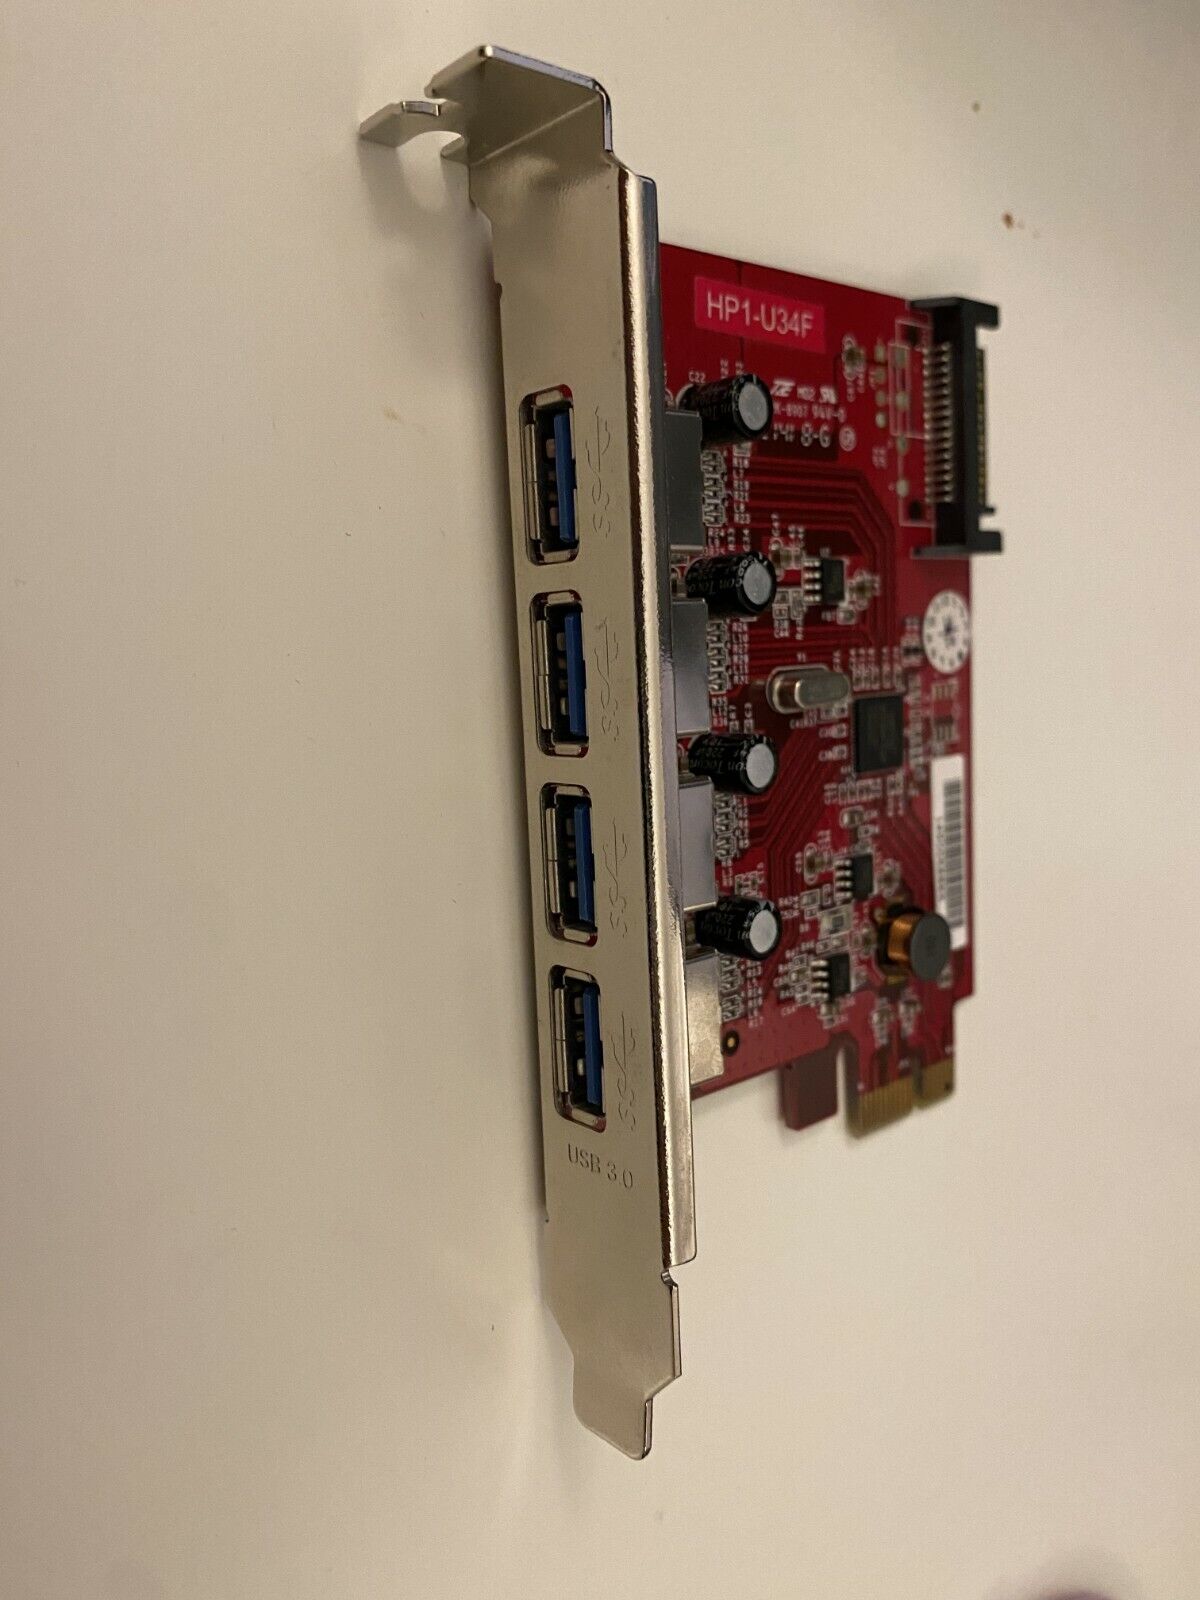 Mediasonic HP1-U34F 4-port External Usb 3.0 Pci-e Express Card